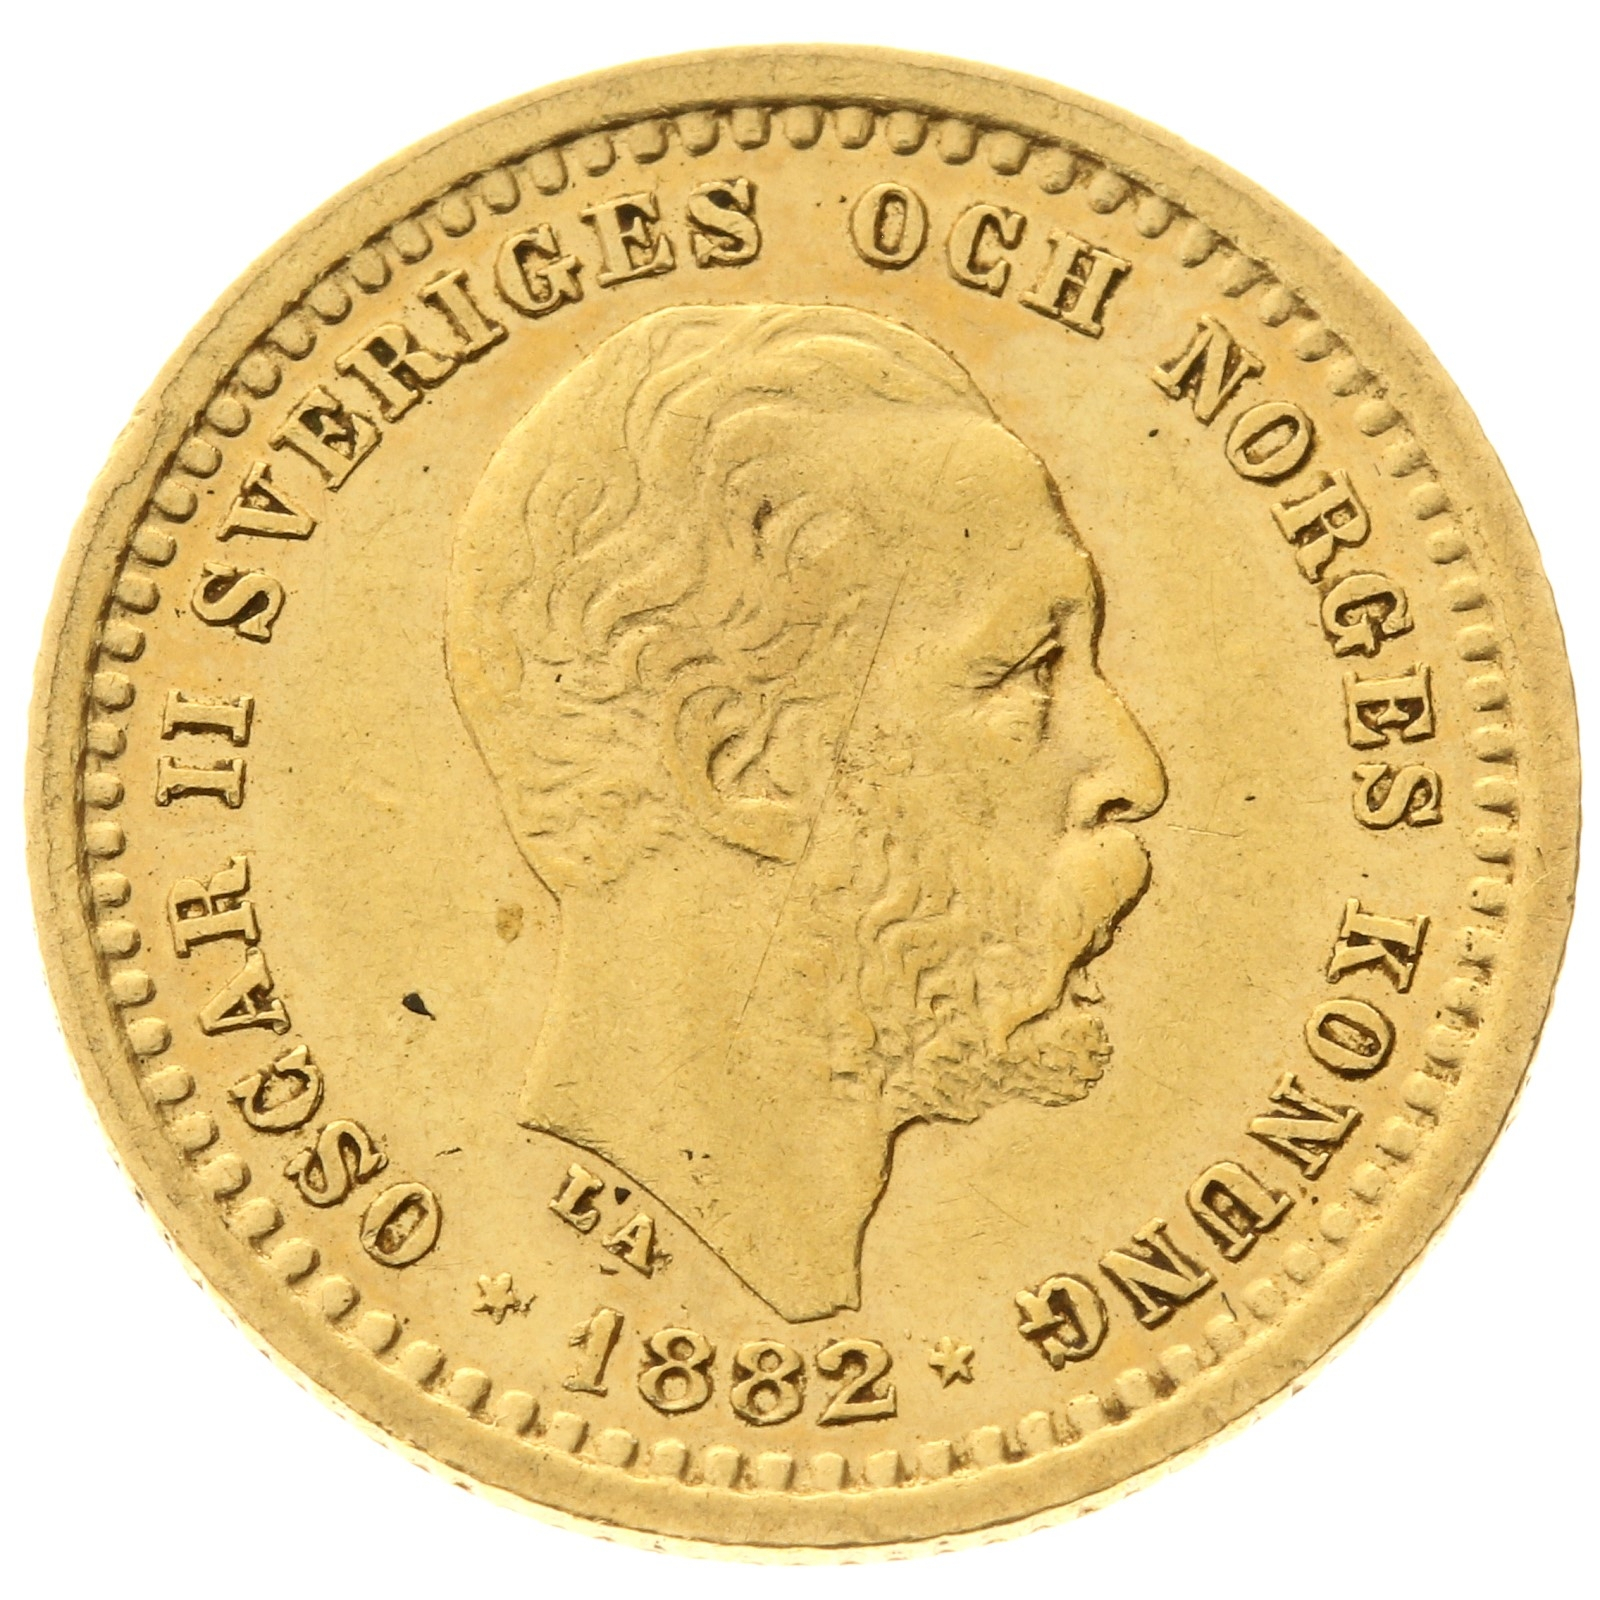 Sweden - 5 kronor - 1882 - Oscar II